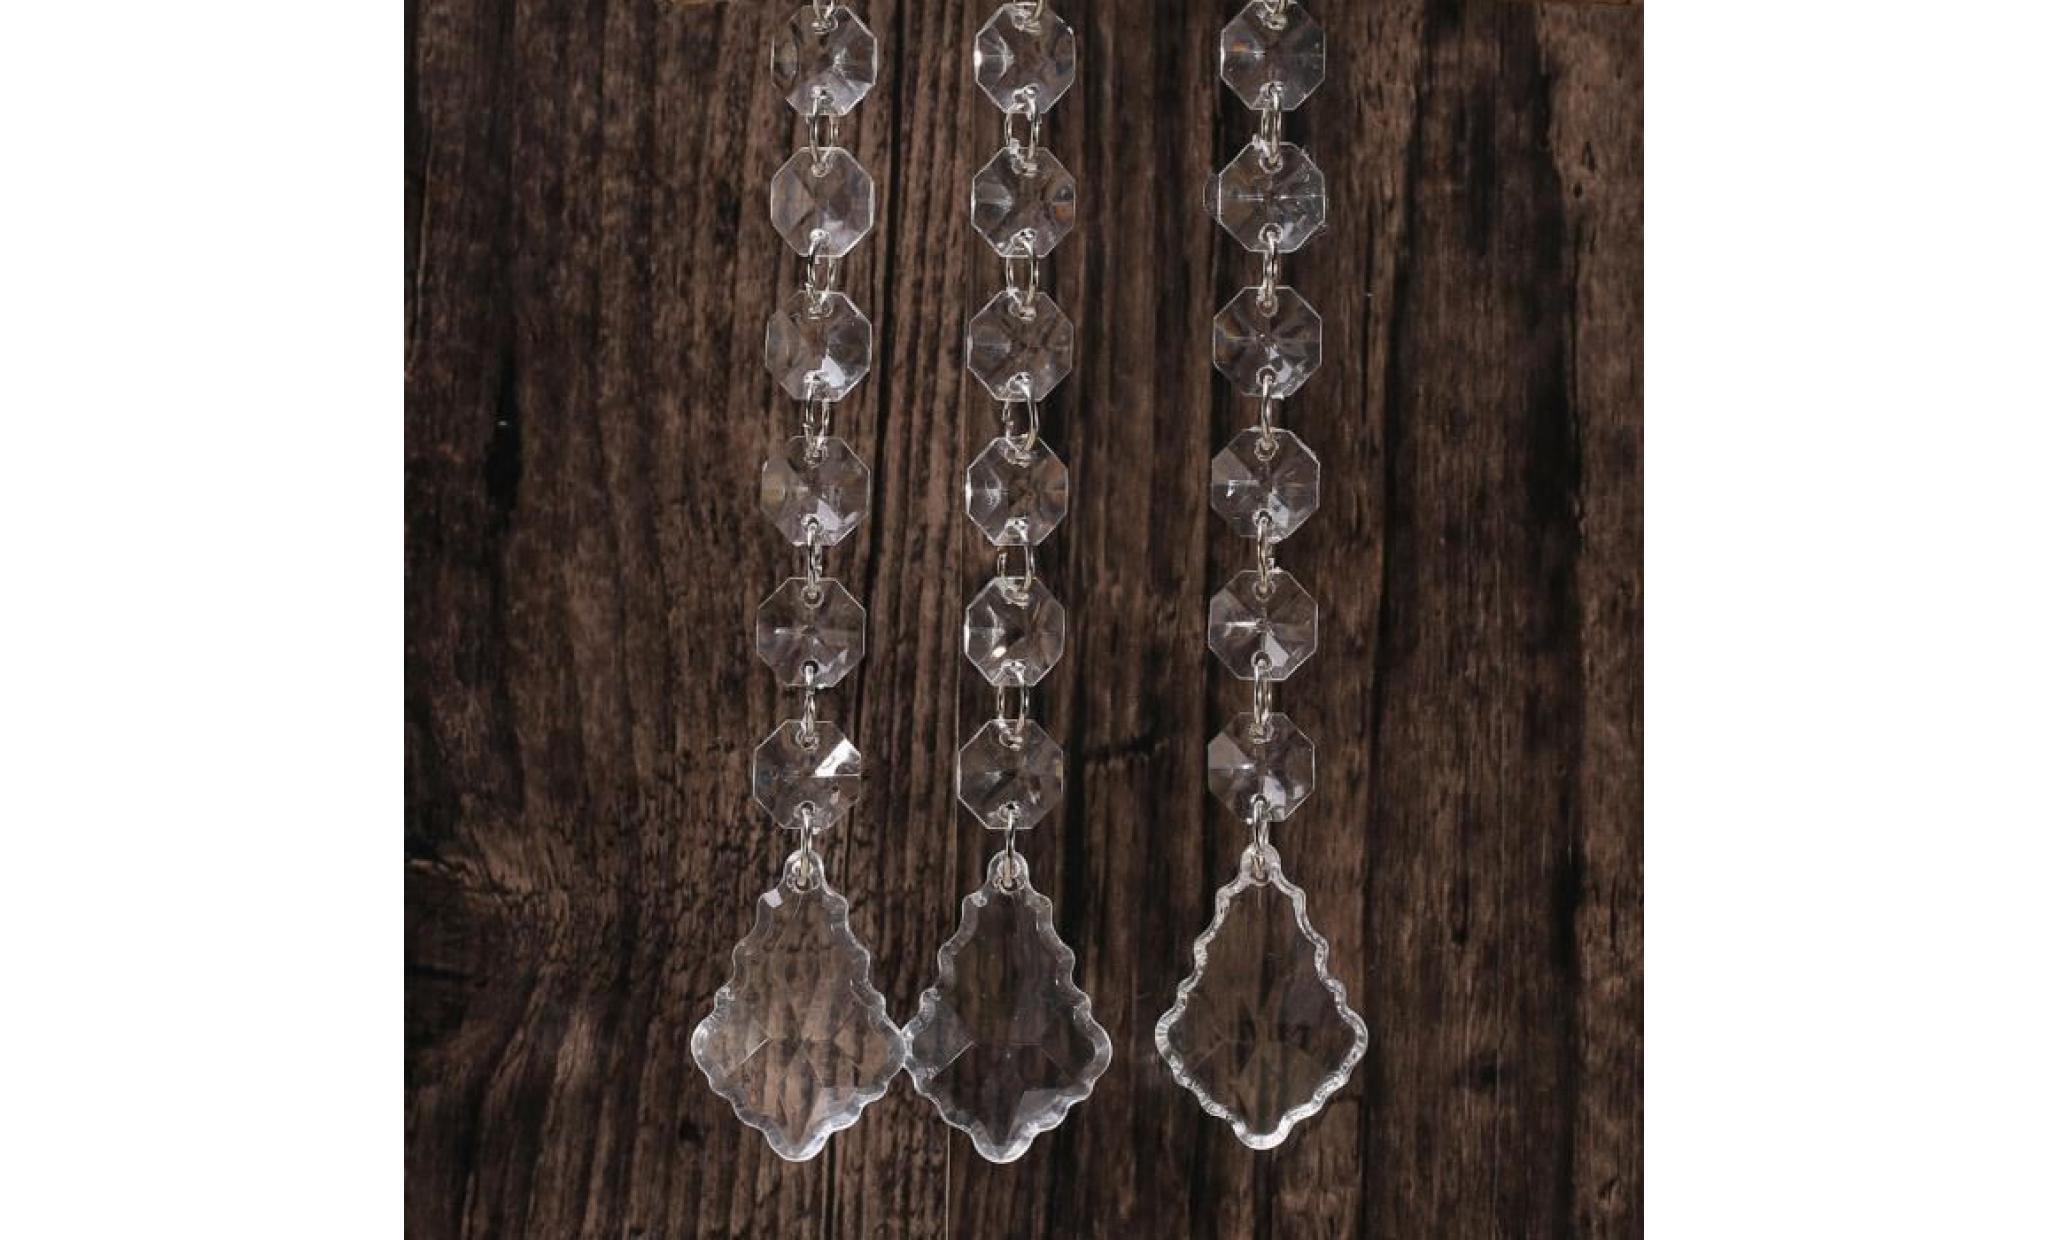 10 pcs wedding acrylic beads drops chandelier hanging curtain interior decor cxq1452